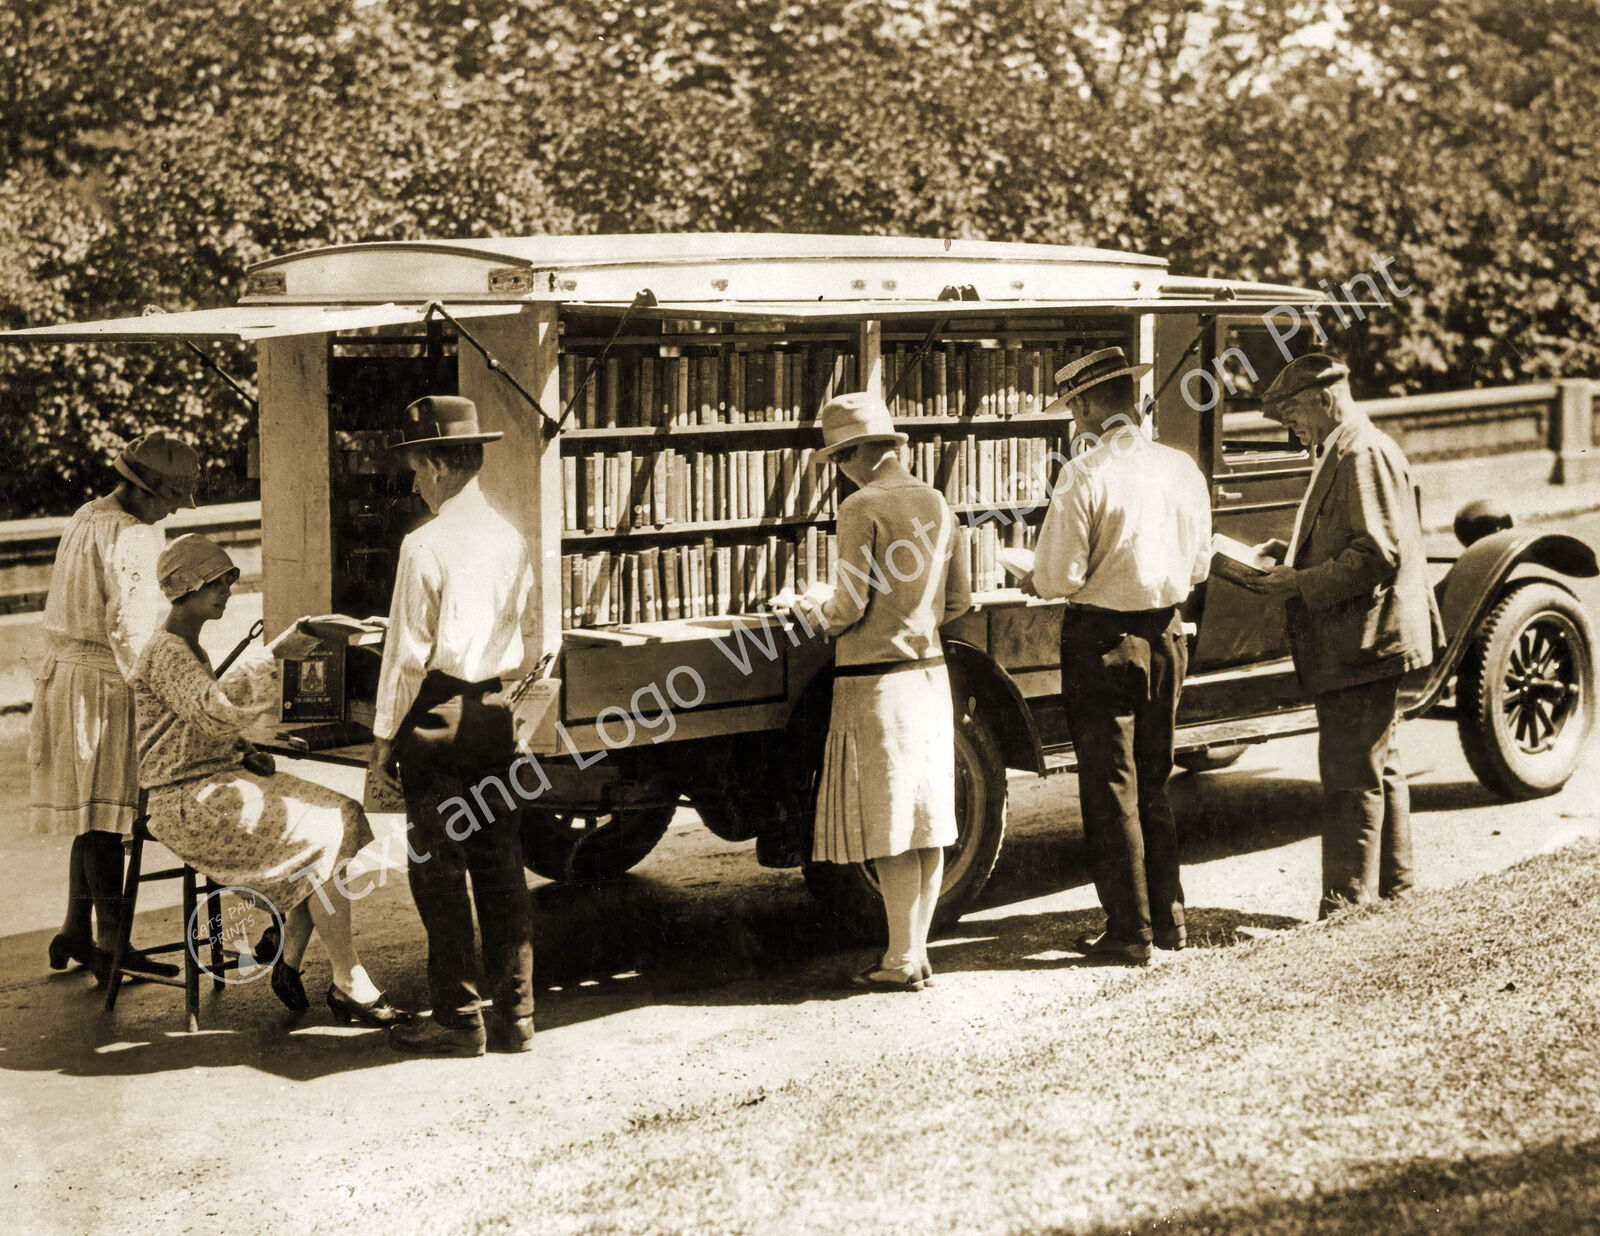 Book Mobile, Cincinnati & Hamilton, Ohio Vintage Old Photo Reprint